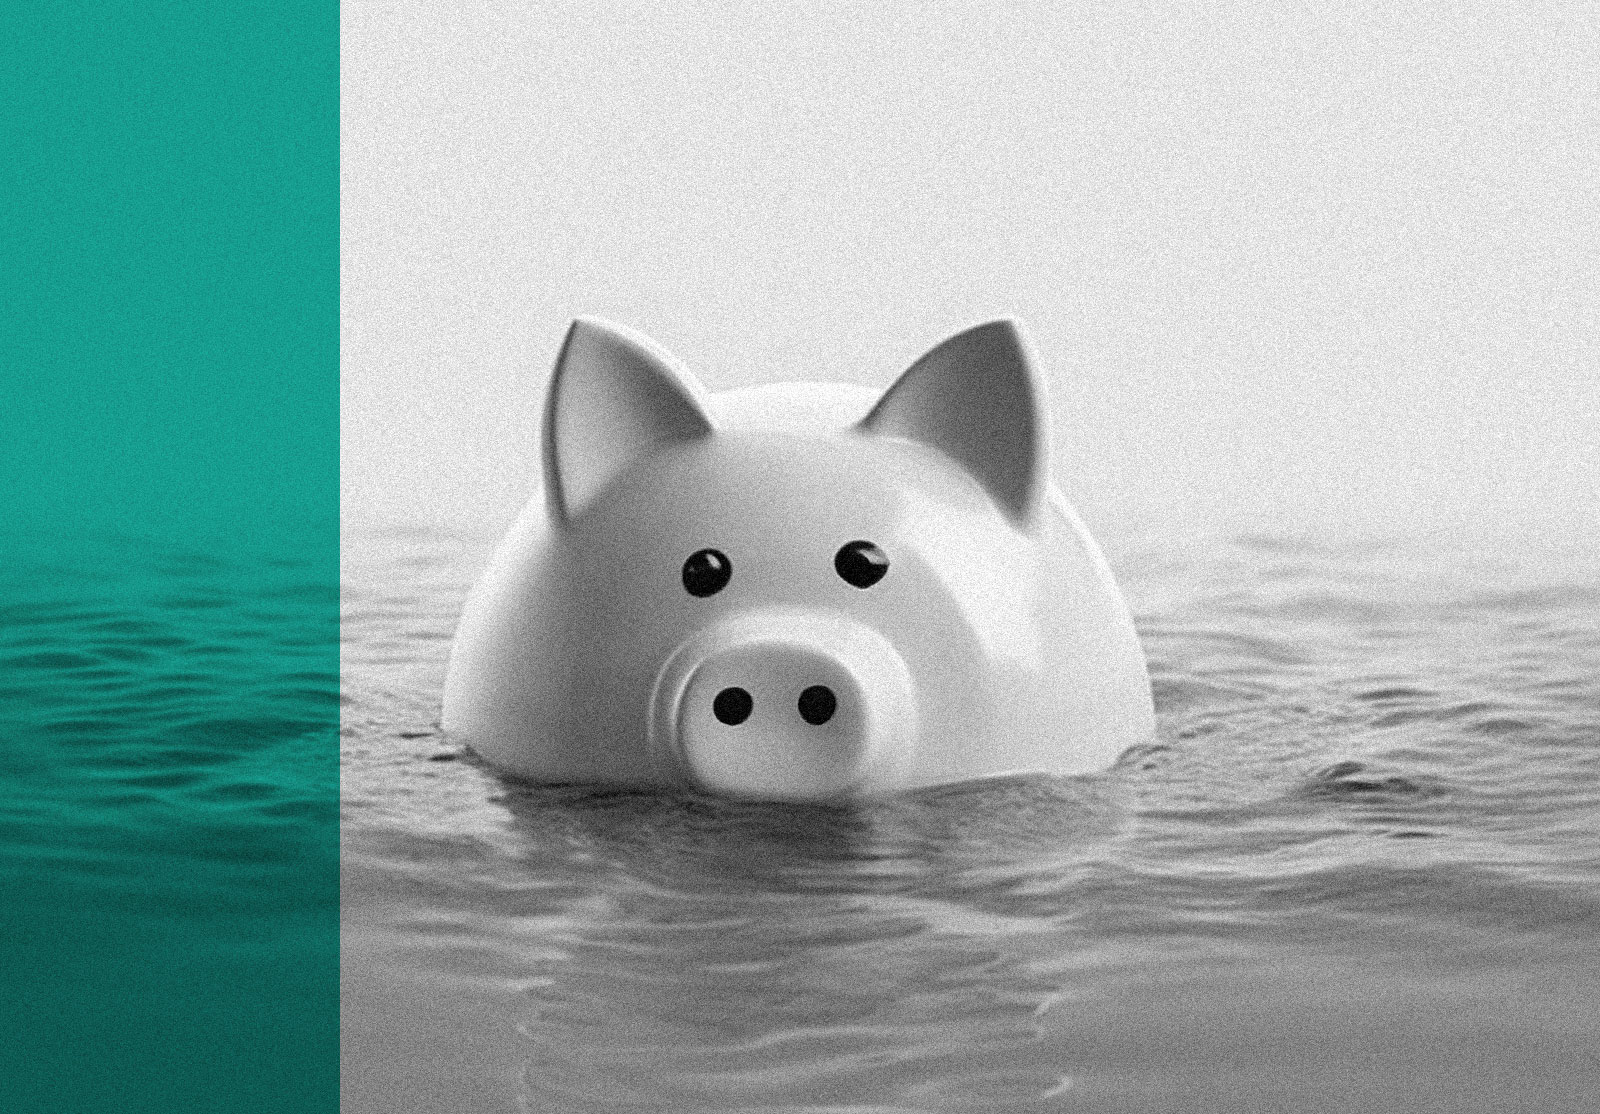 Piggy bank sinking in water